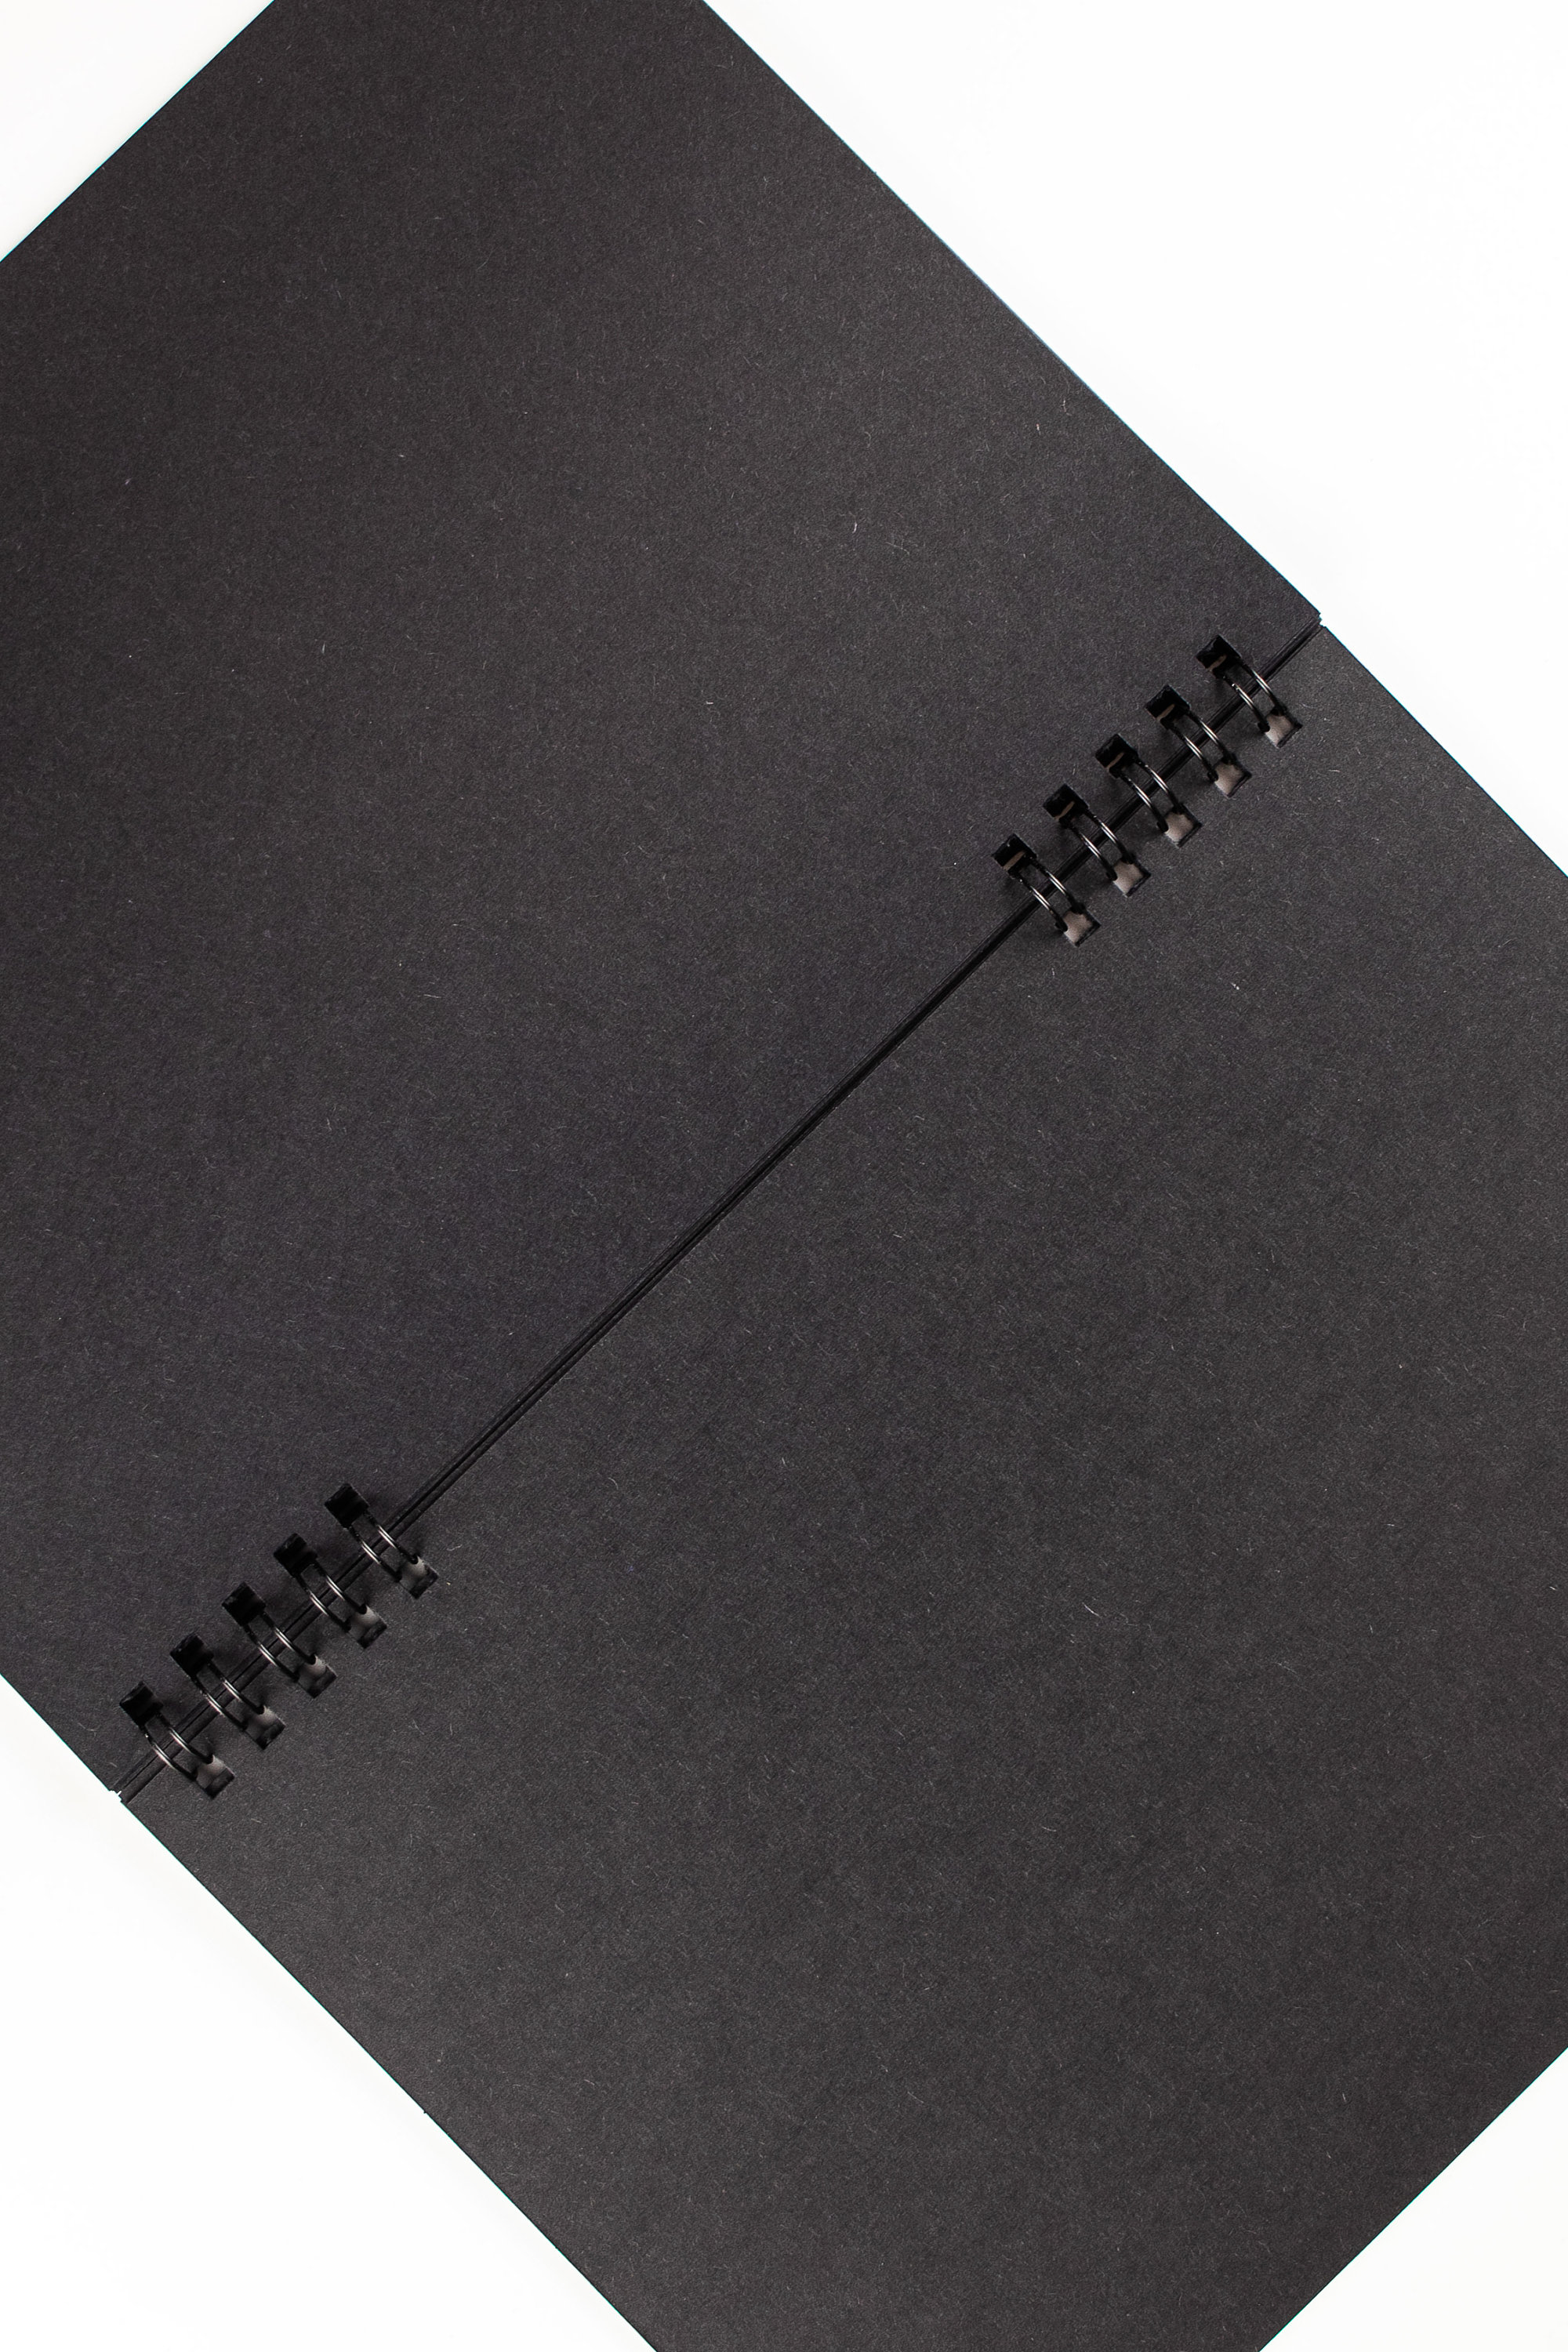 2 Pcs A6 Mini Black Sheets 10X14 Notebook 30 Sheets 60 Pages, Black Paper  Notebook, Black Page Notebook, Black Paper Diary 